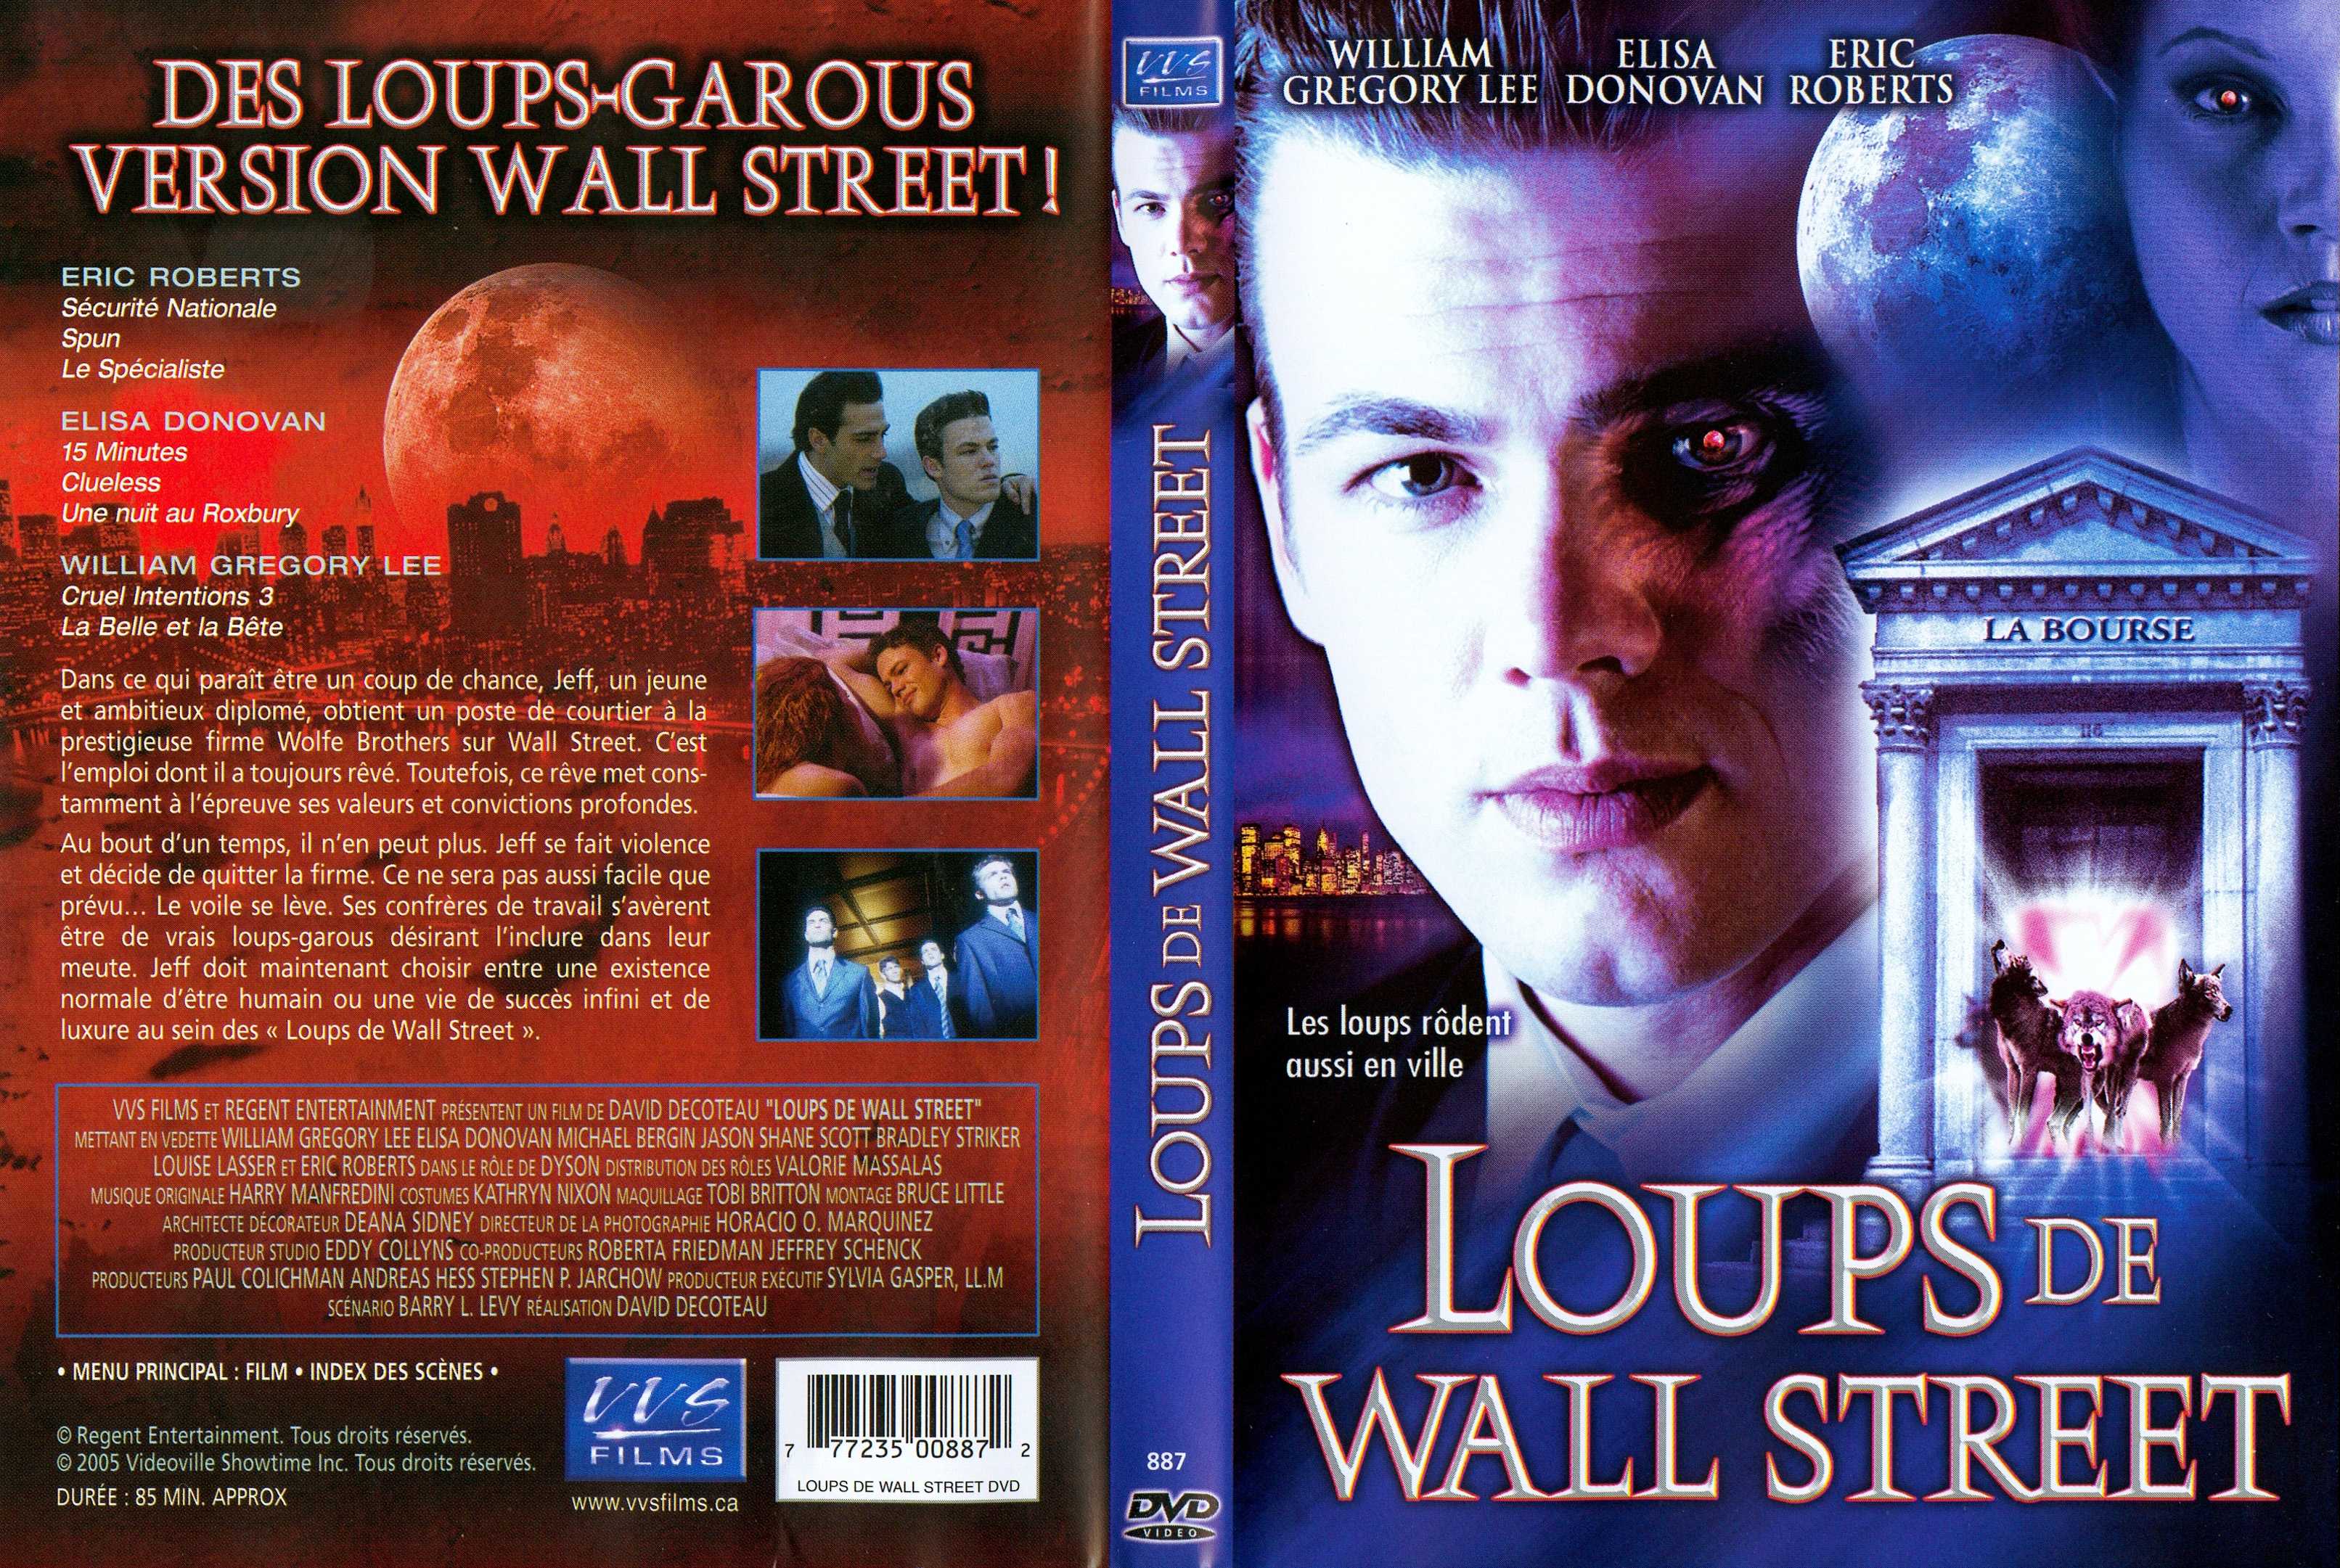 Jaquette DVD Loups de wall street